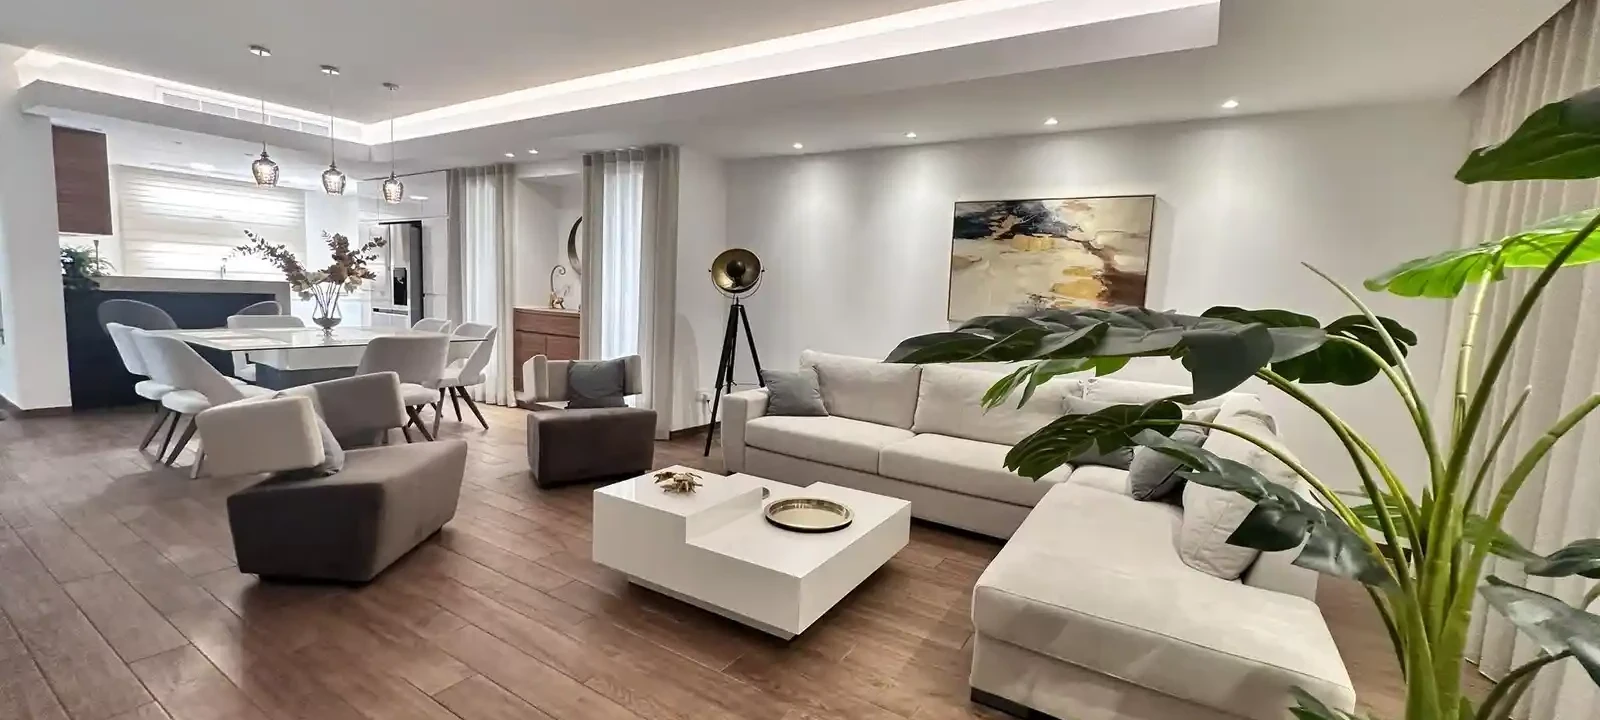 3-bedroom villa fоr sаle €740.000, image 1